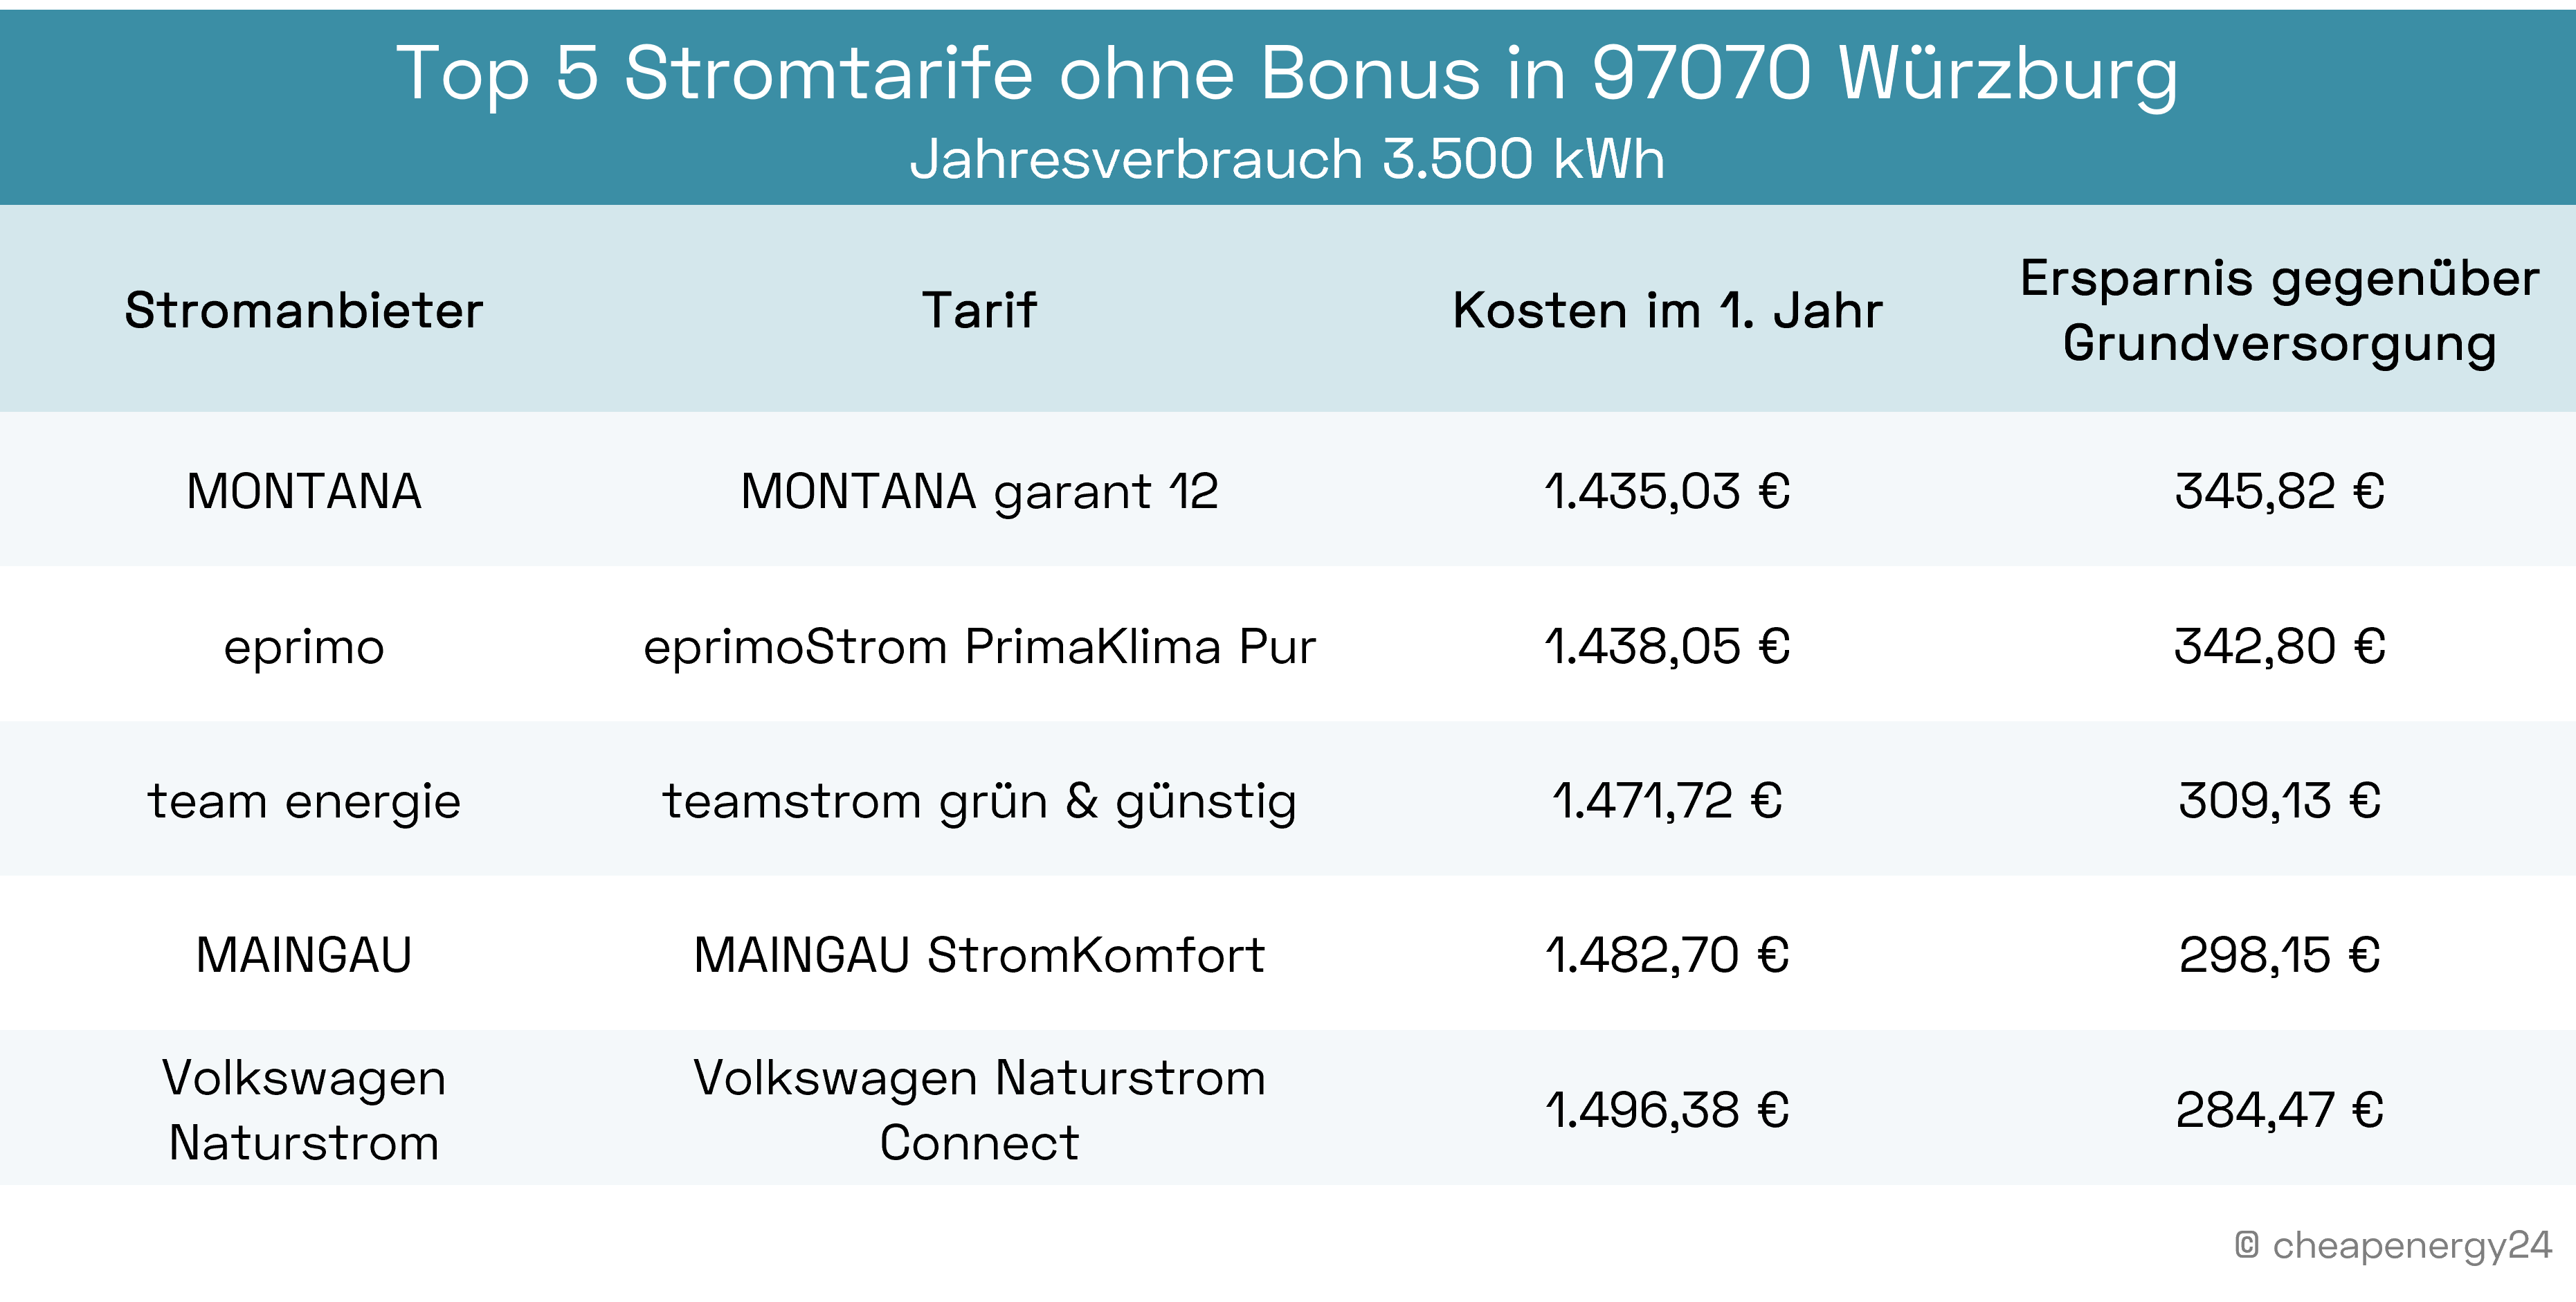 Beste Stromtarife ohne Bonus in Würzburg